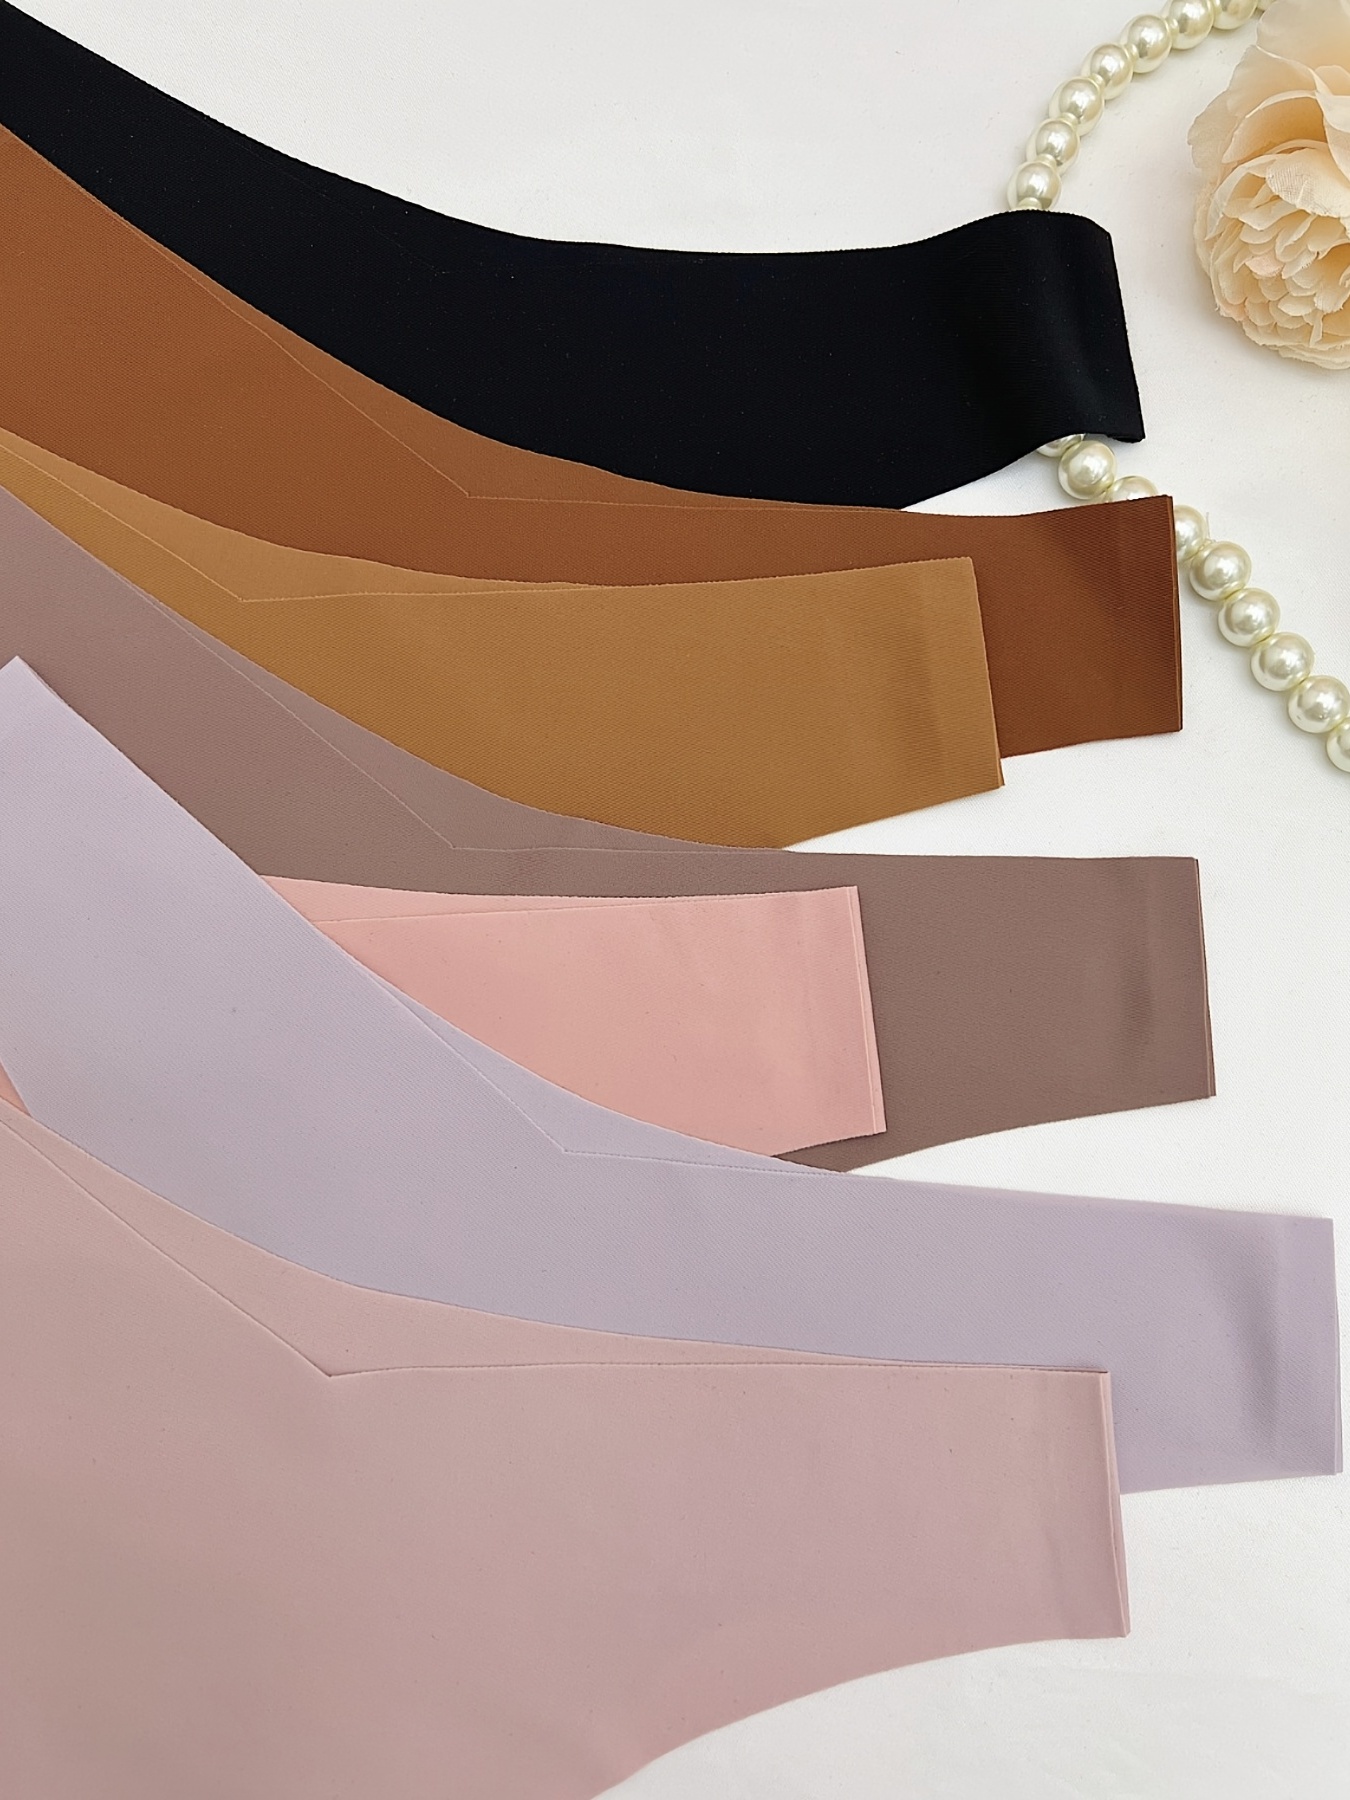 Women Seamless Panty Soft Comfort Underwear Solid color 1pcs